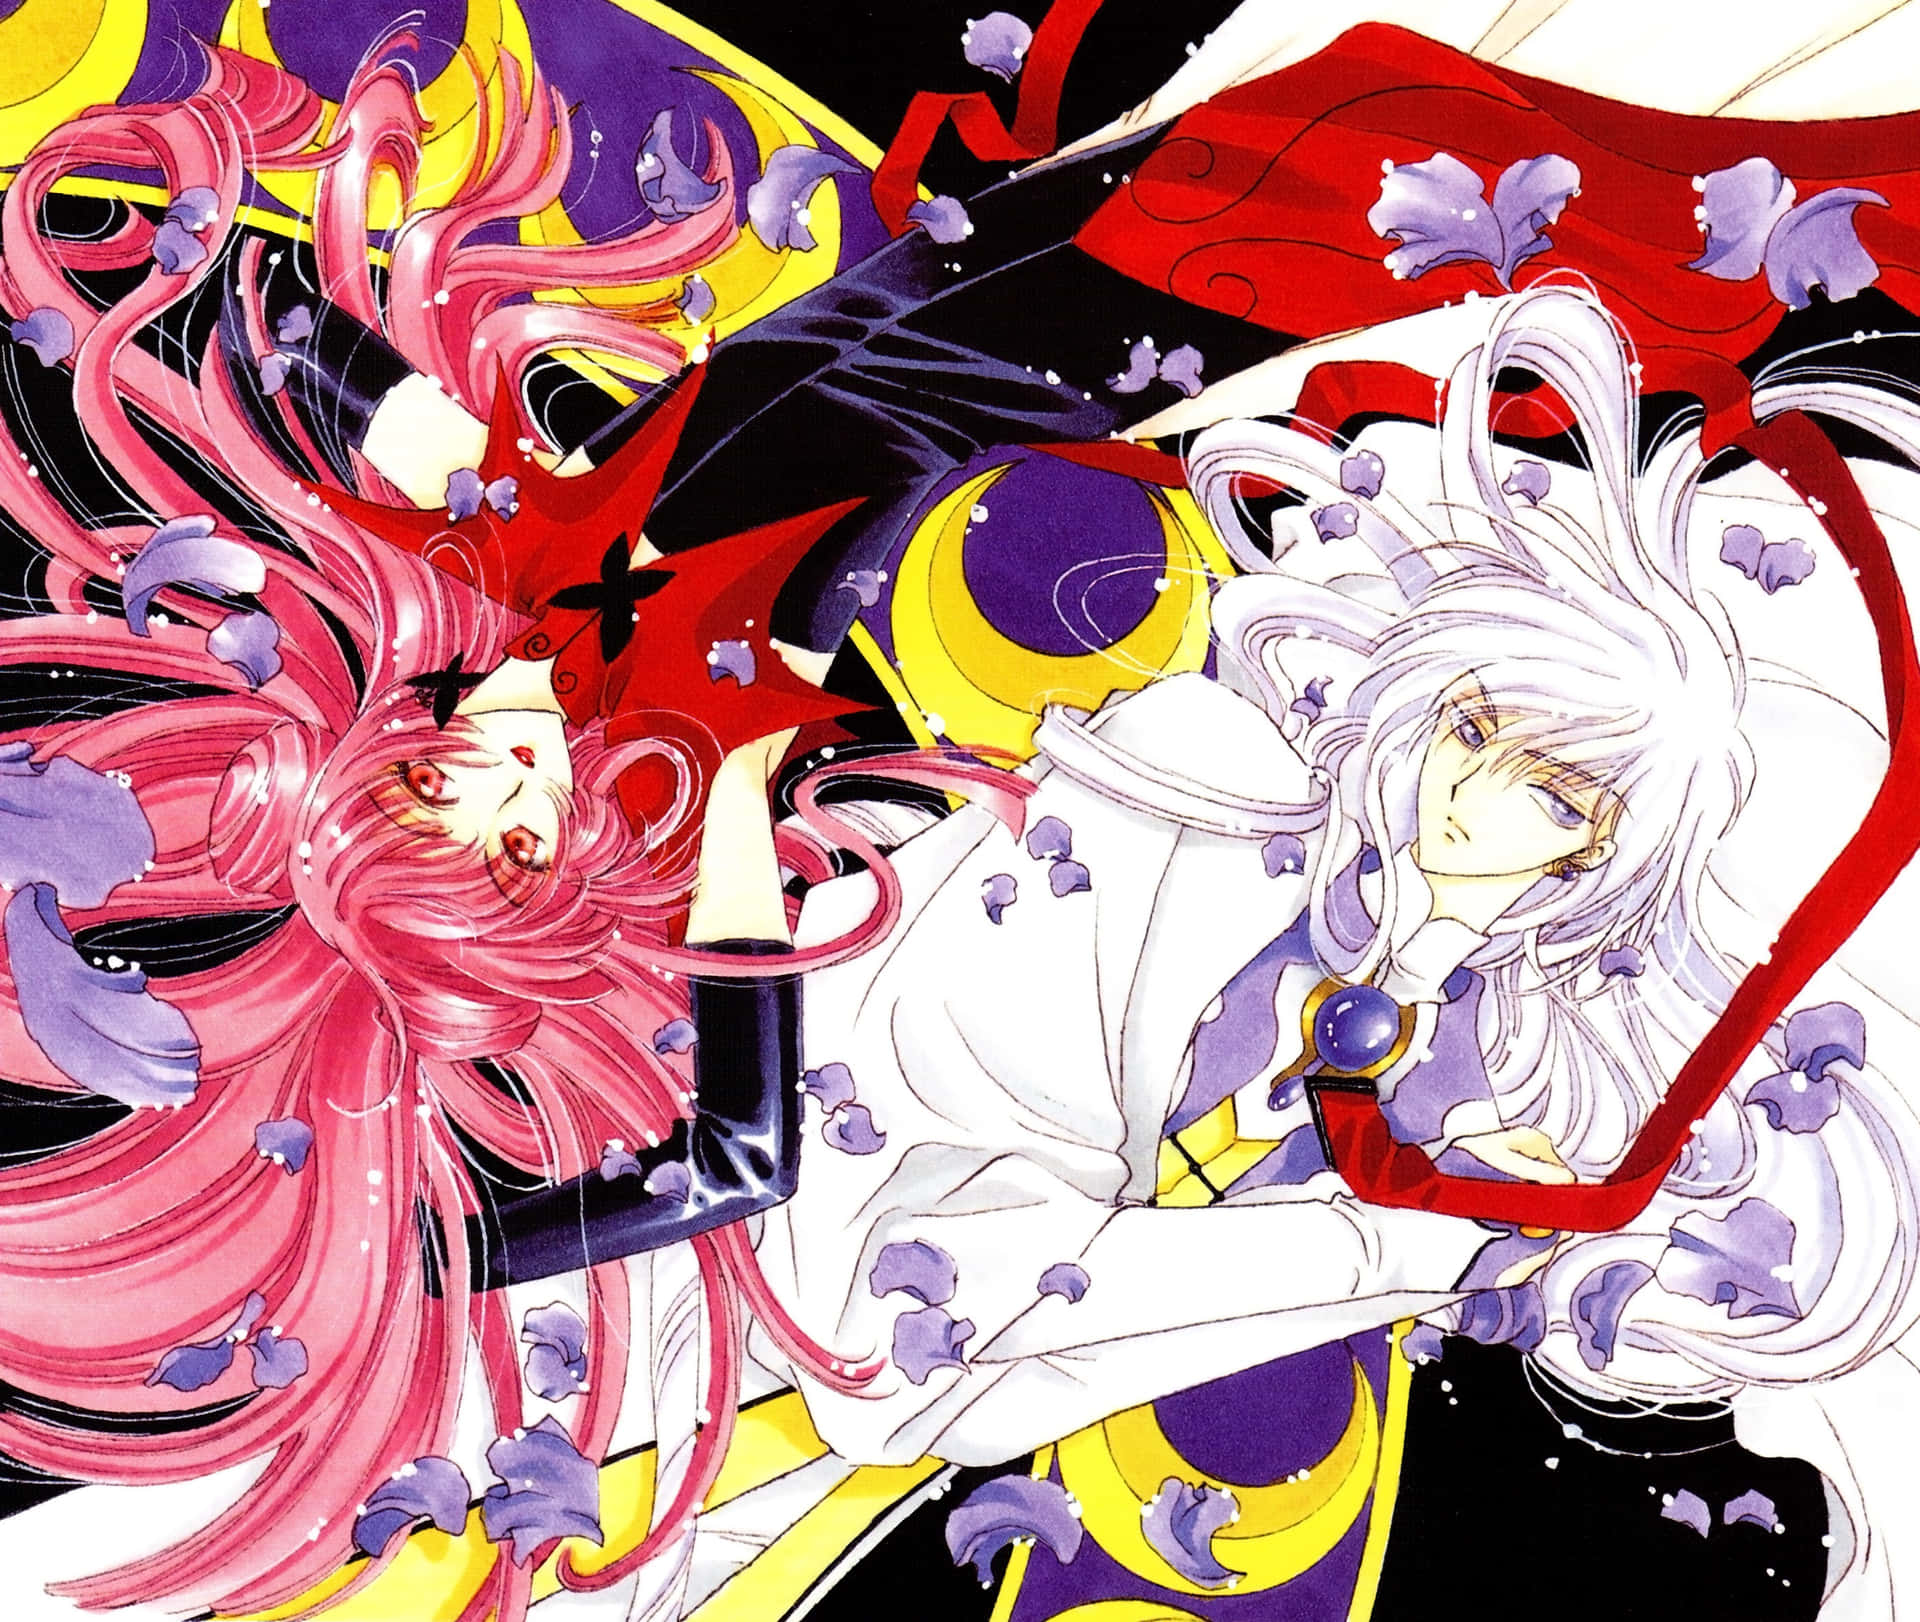 Cardcaptor Sakura — A Japanese Manga and Anime Series